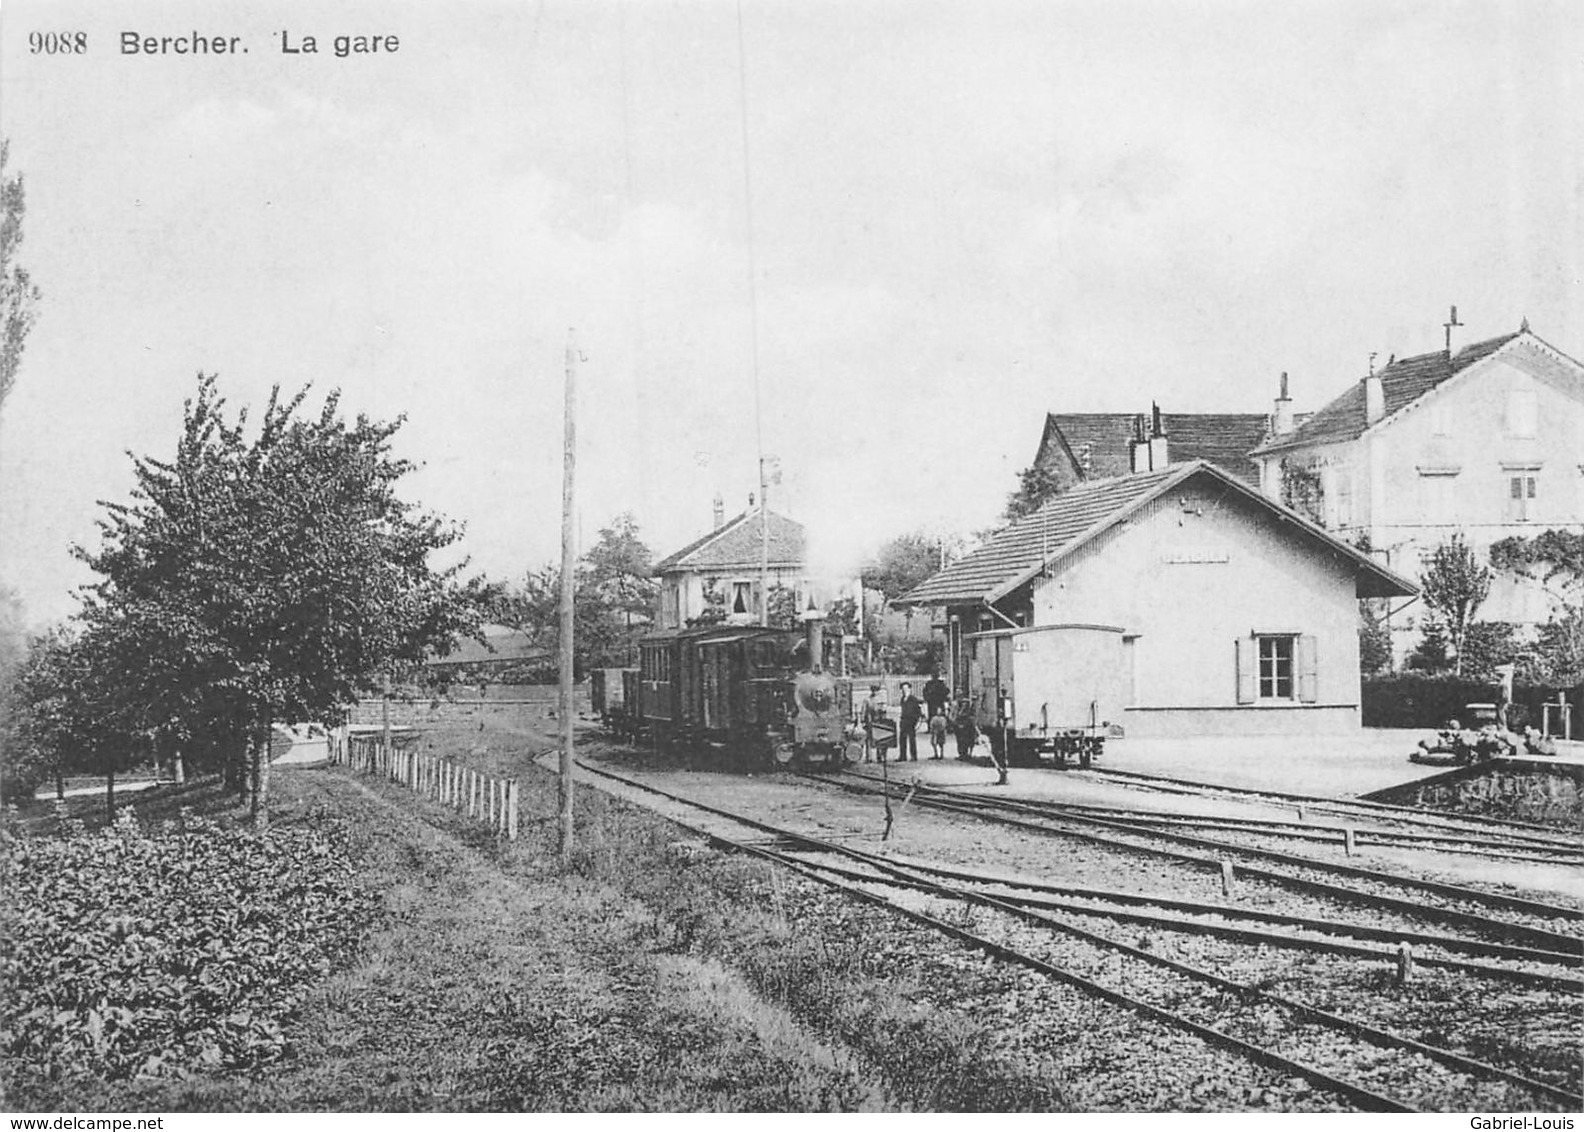 BVA - Bercher La Gare Buffet De - Lausanne - Echallens - Bercher - LEB - L.E.B.  - Ligne De Chemin De Fer Train - - Bercher